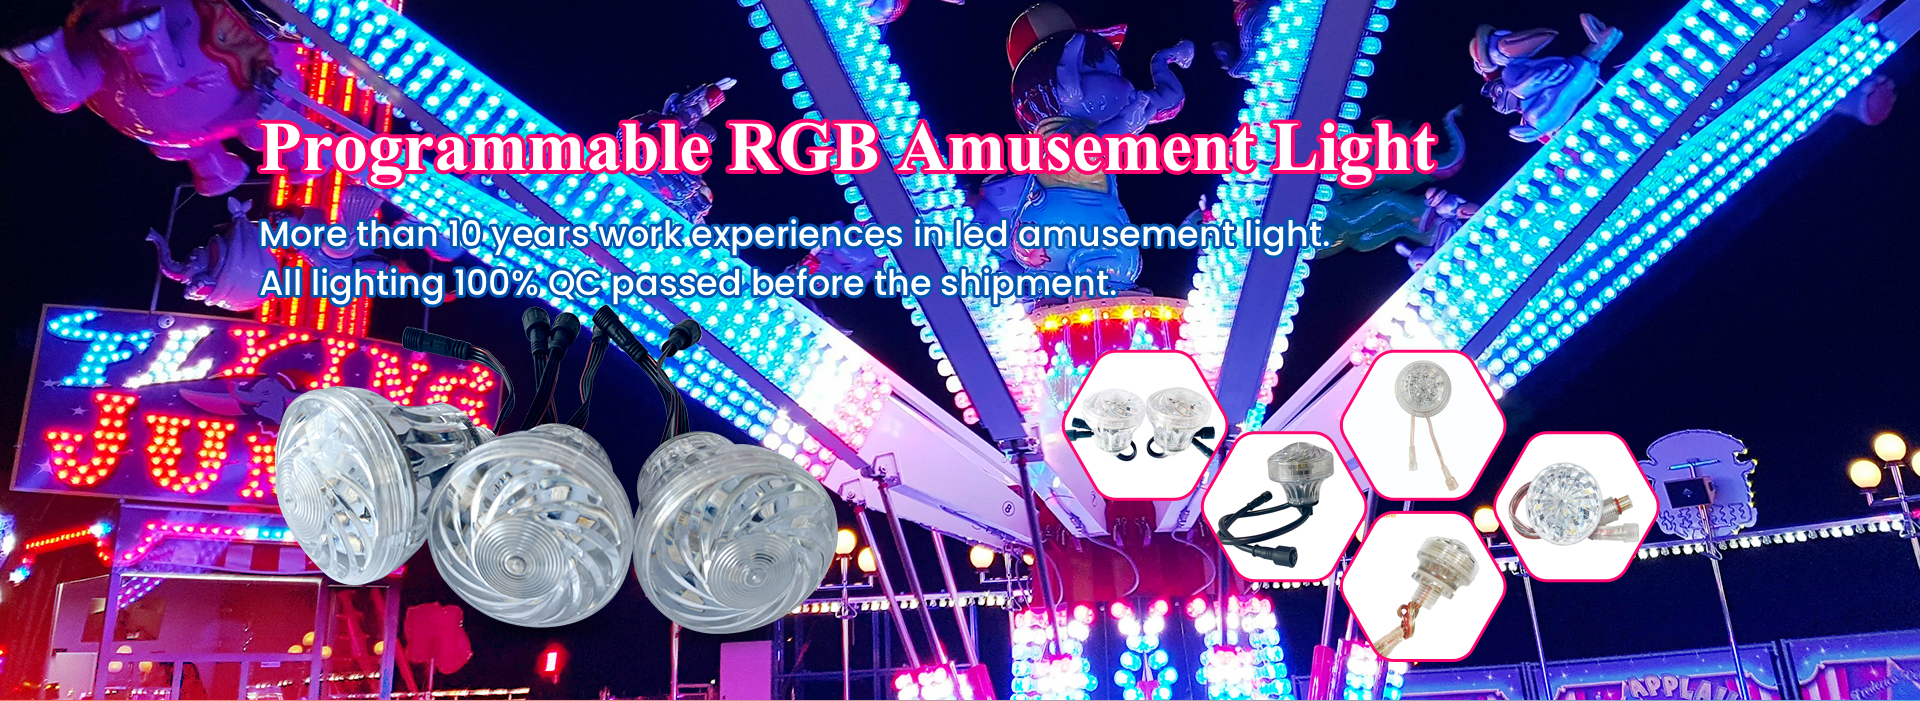 Programmable RGB Amusement Light